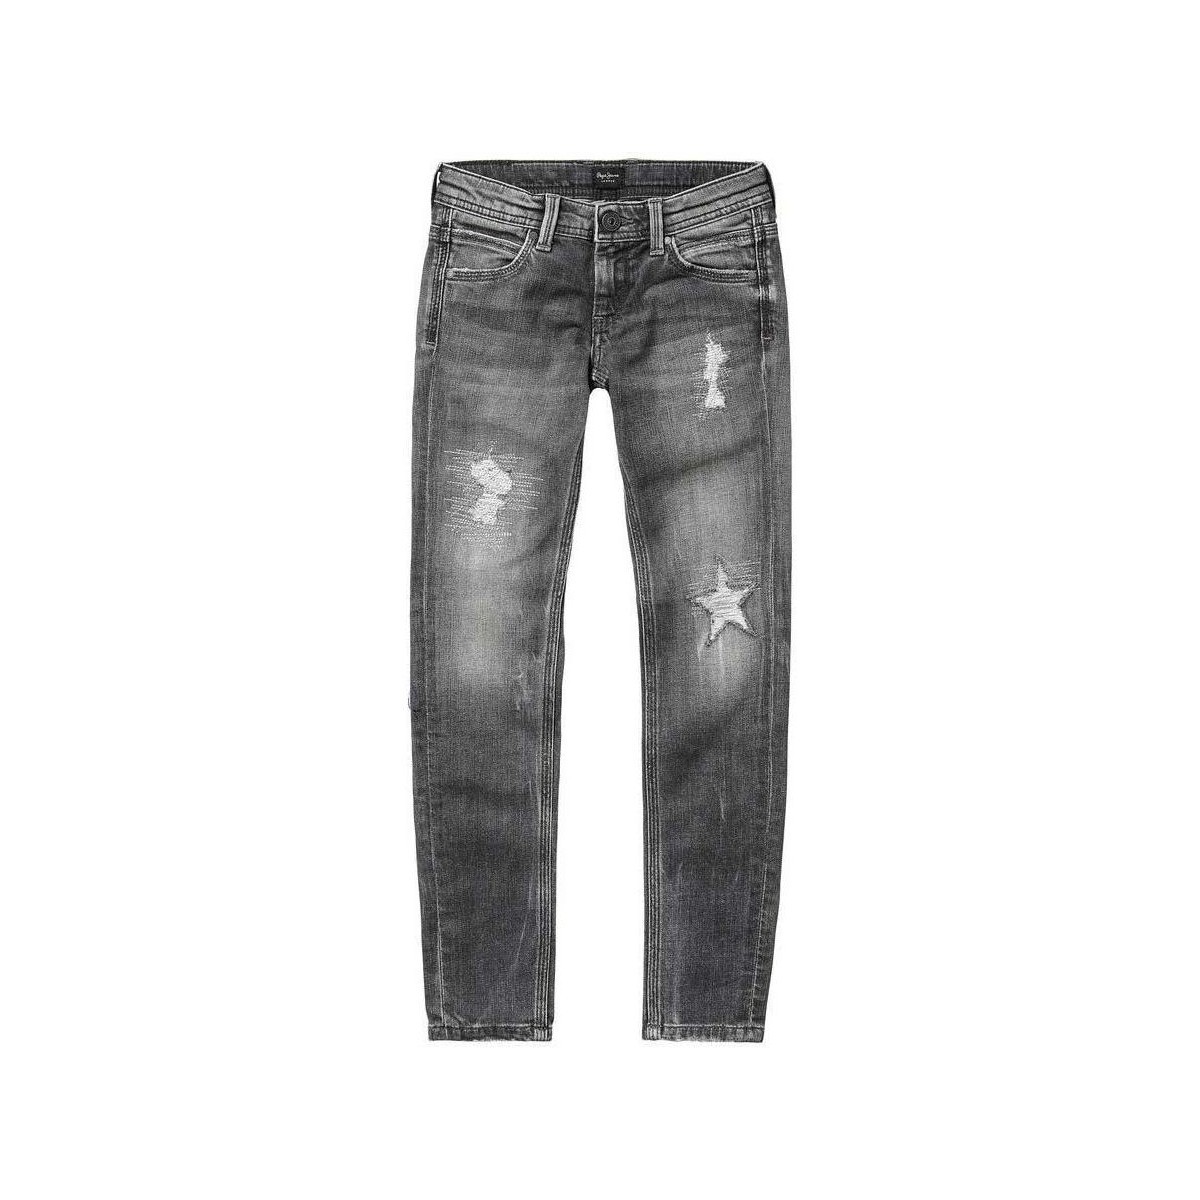 textil Pige Jeans Pepe jeans  Grå